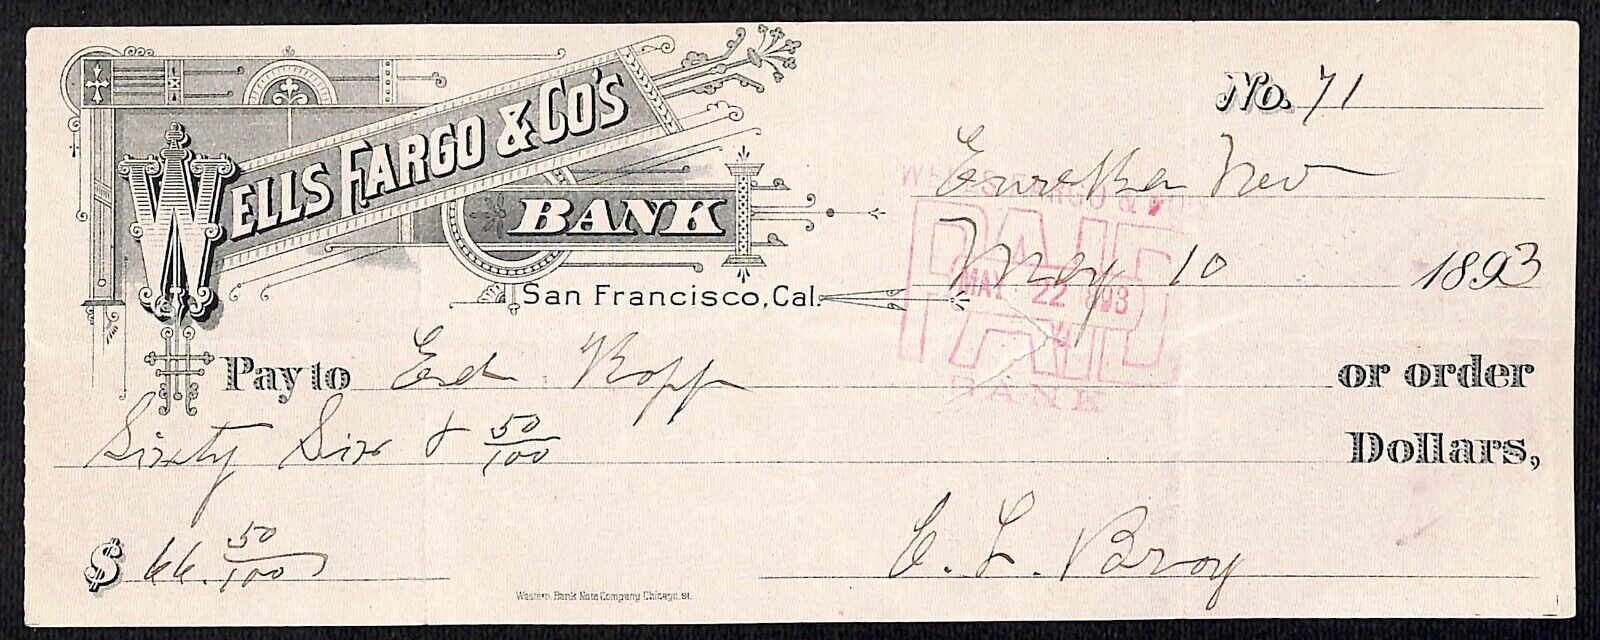 Wells Fargo & Co. Bank 1893 San Francisco Check Ed Koff #71 $66.50